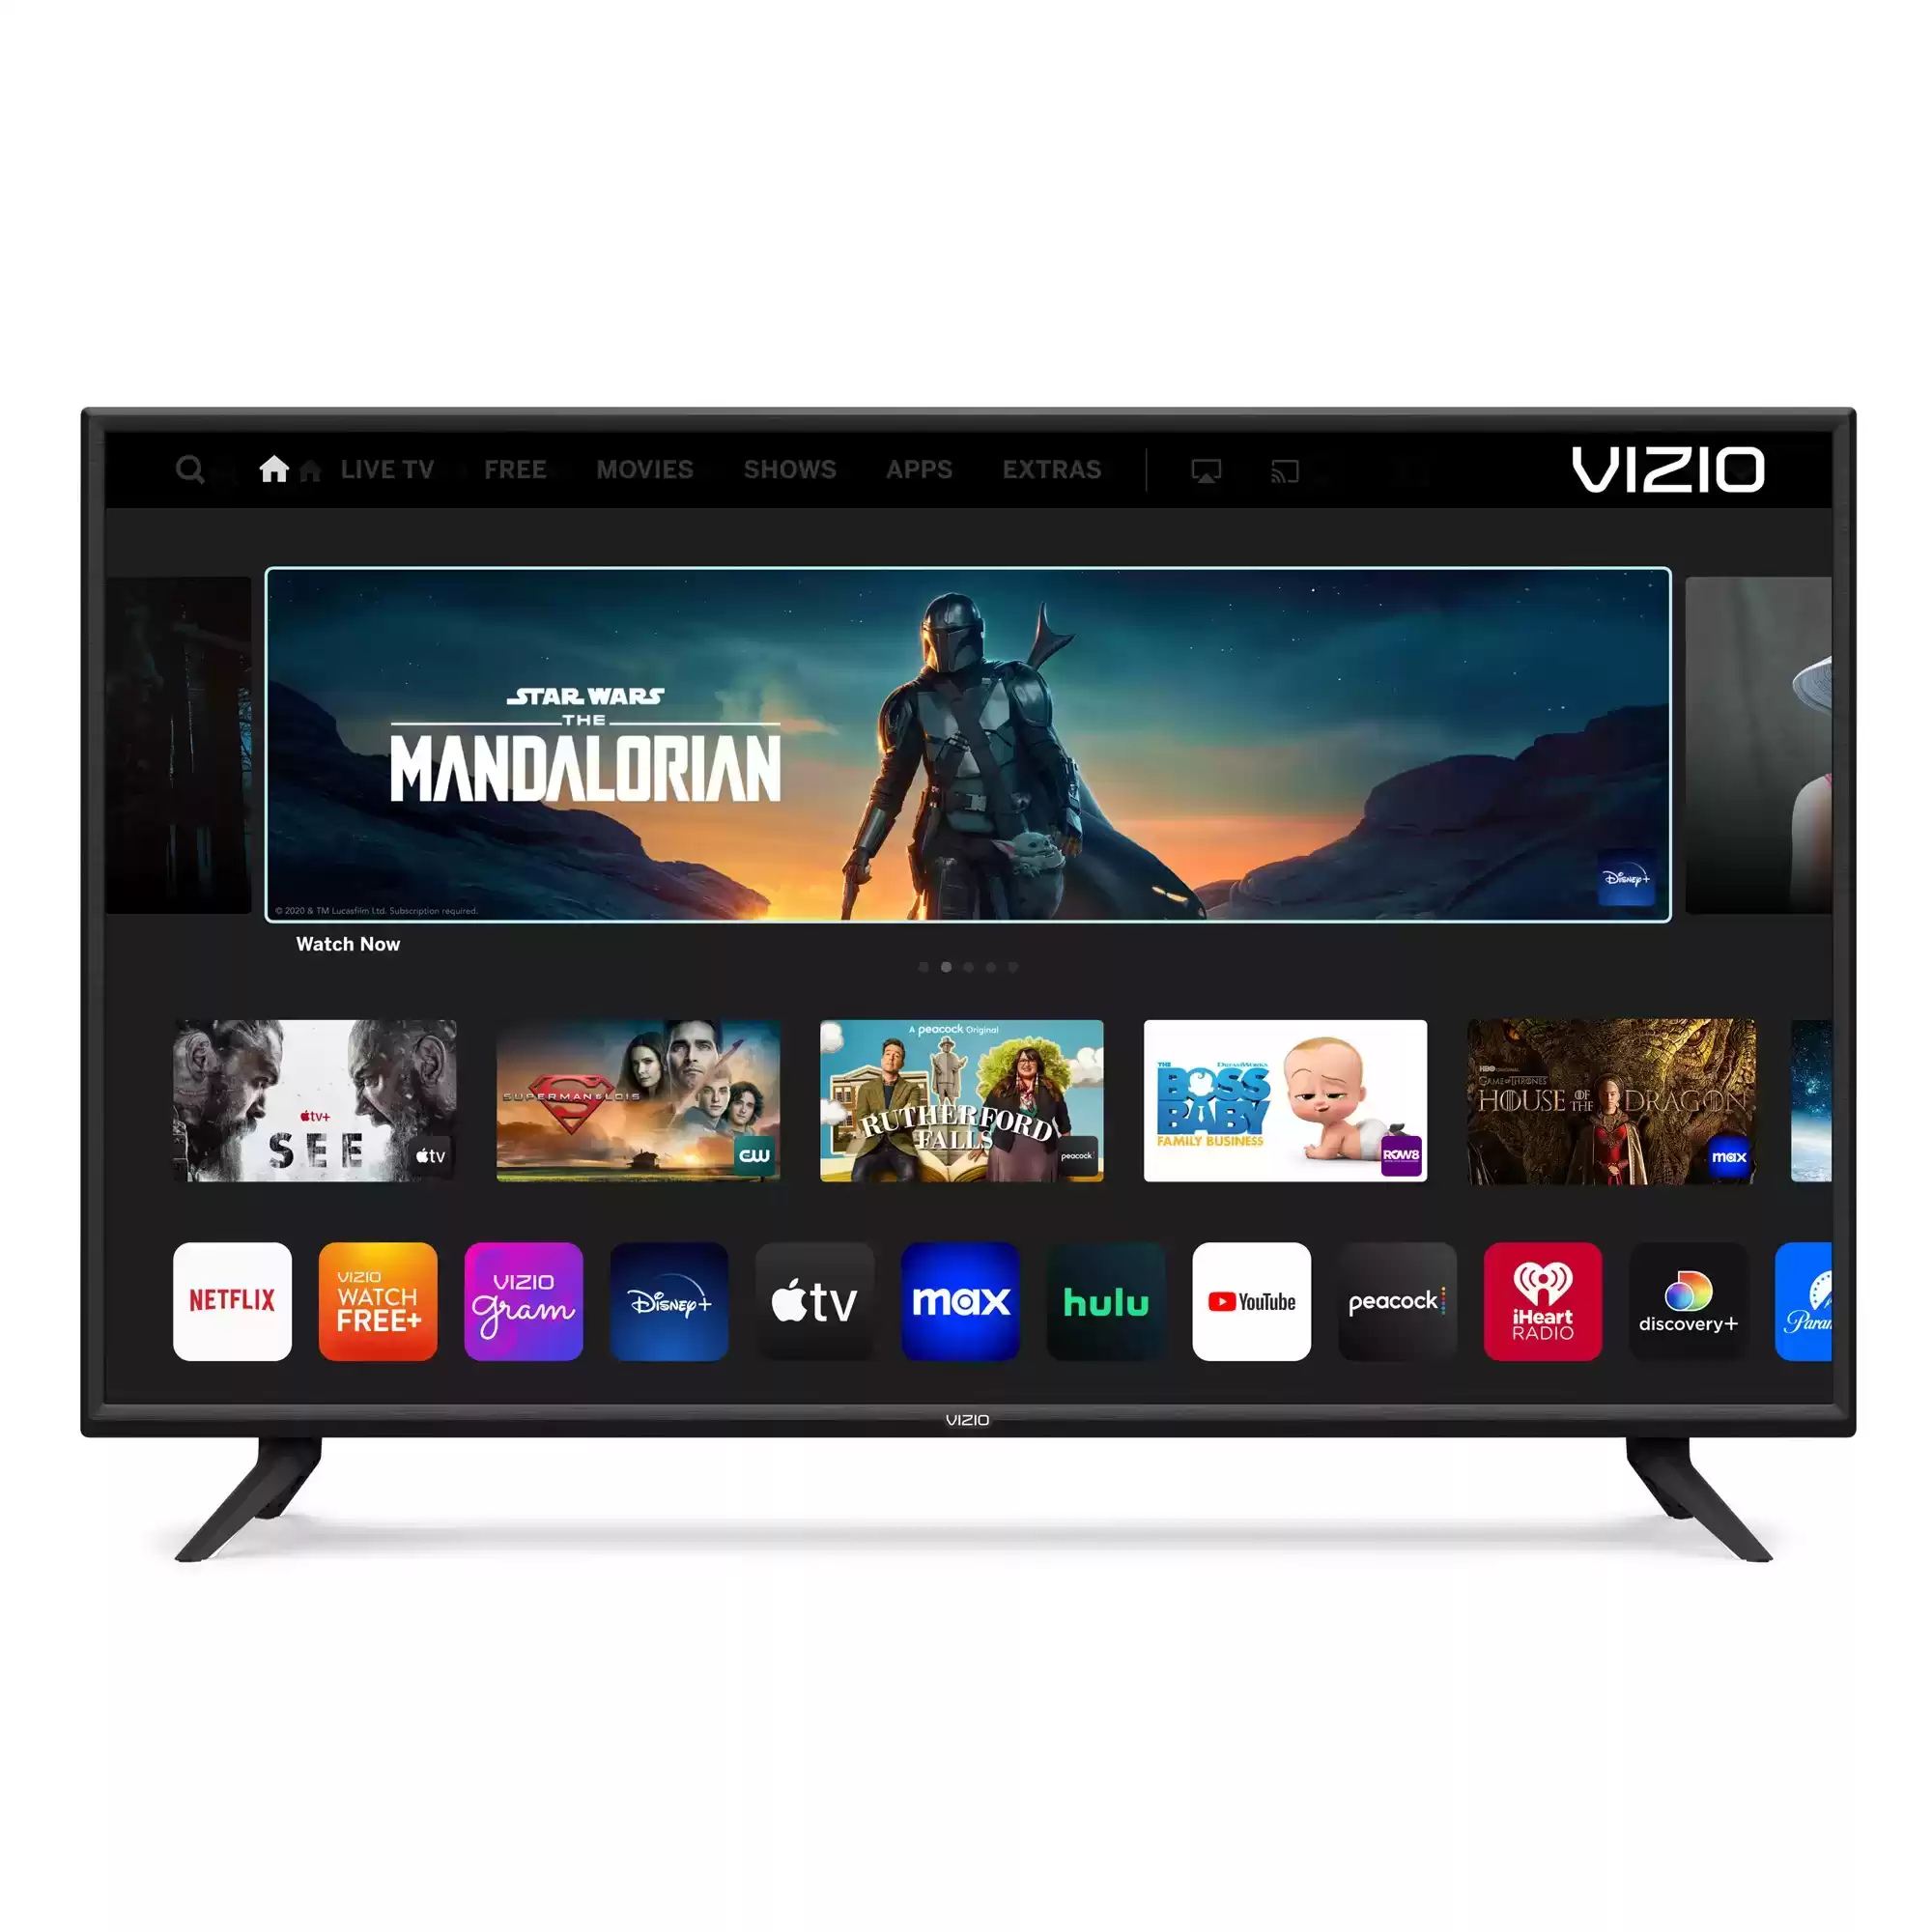 Vizio (USA brand) 50 inch 4k UHD HDR Smart TV